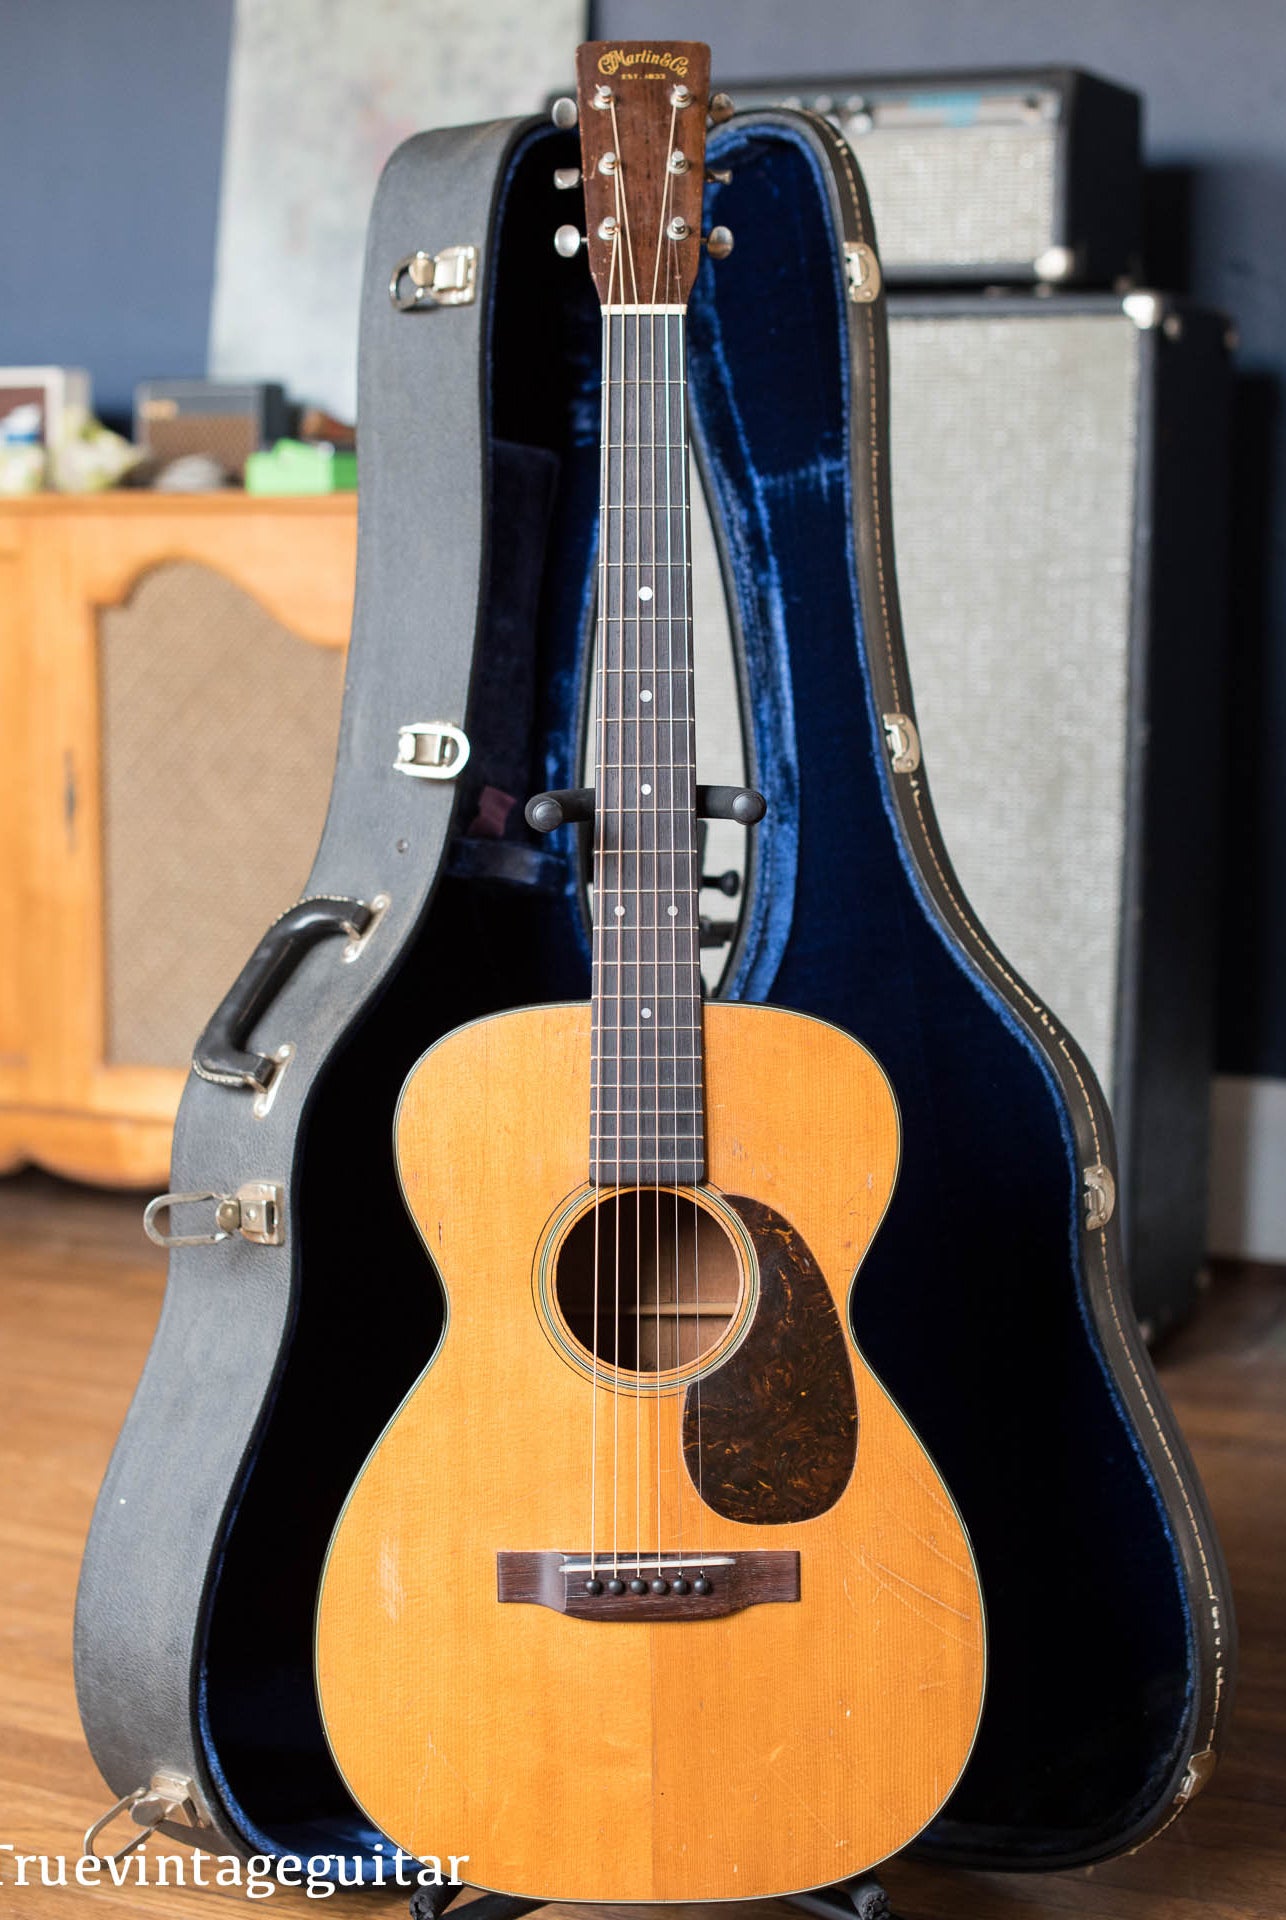 Vintage 1948 Martin 0-18 acoustic guitar